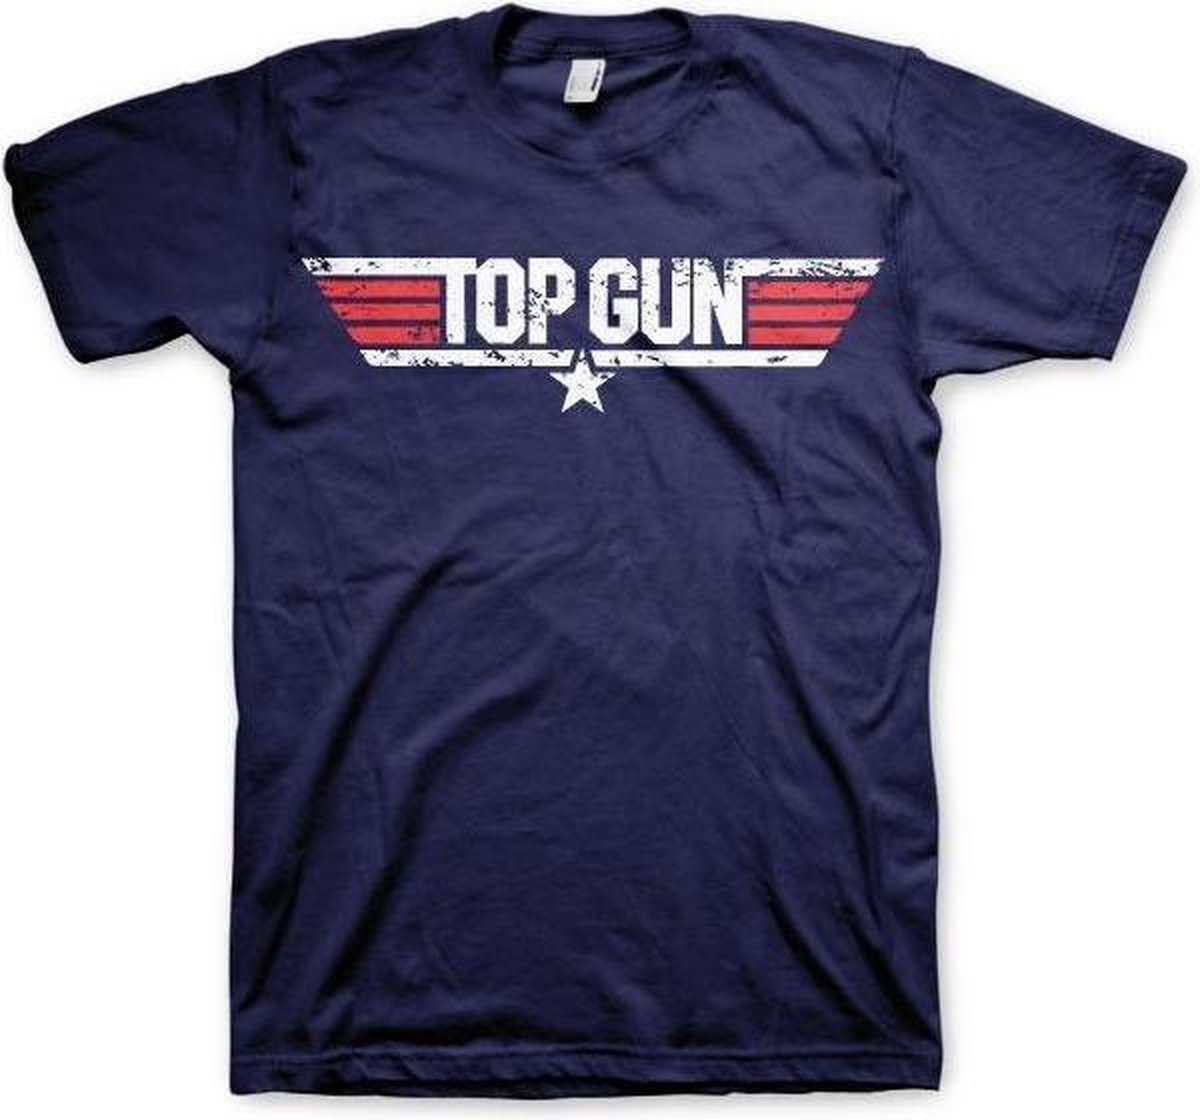 TOP GUN - T-Shirt Distressed Logo - Navy (L)